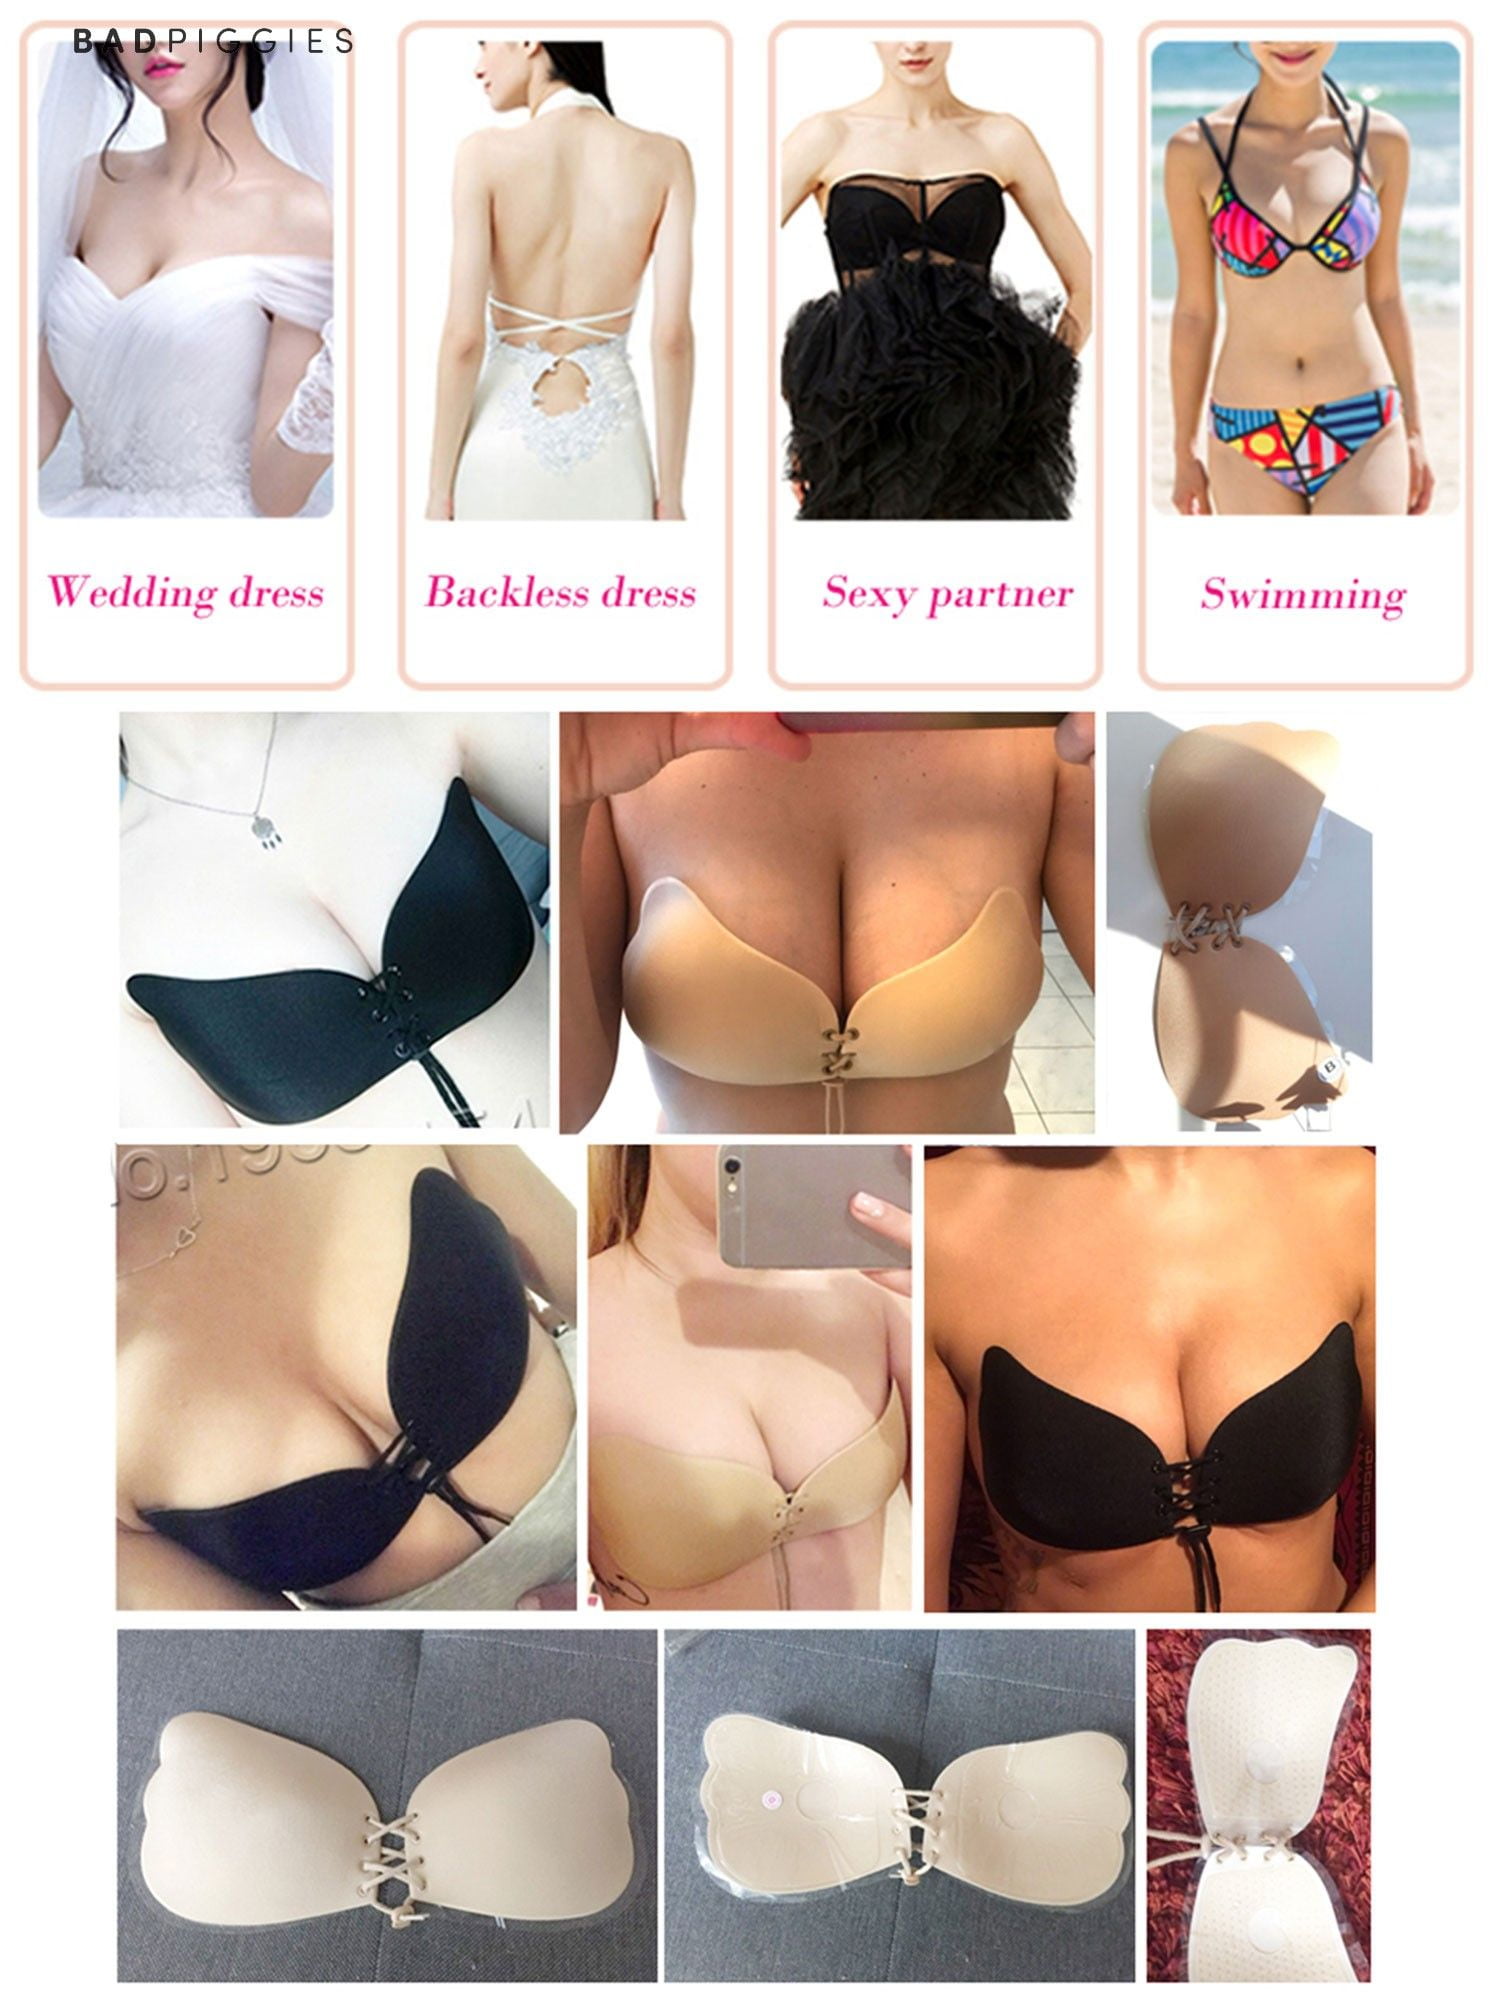 bras for backless dresses